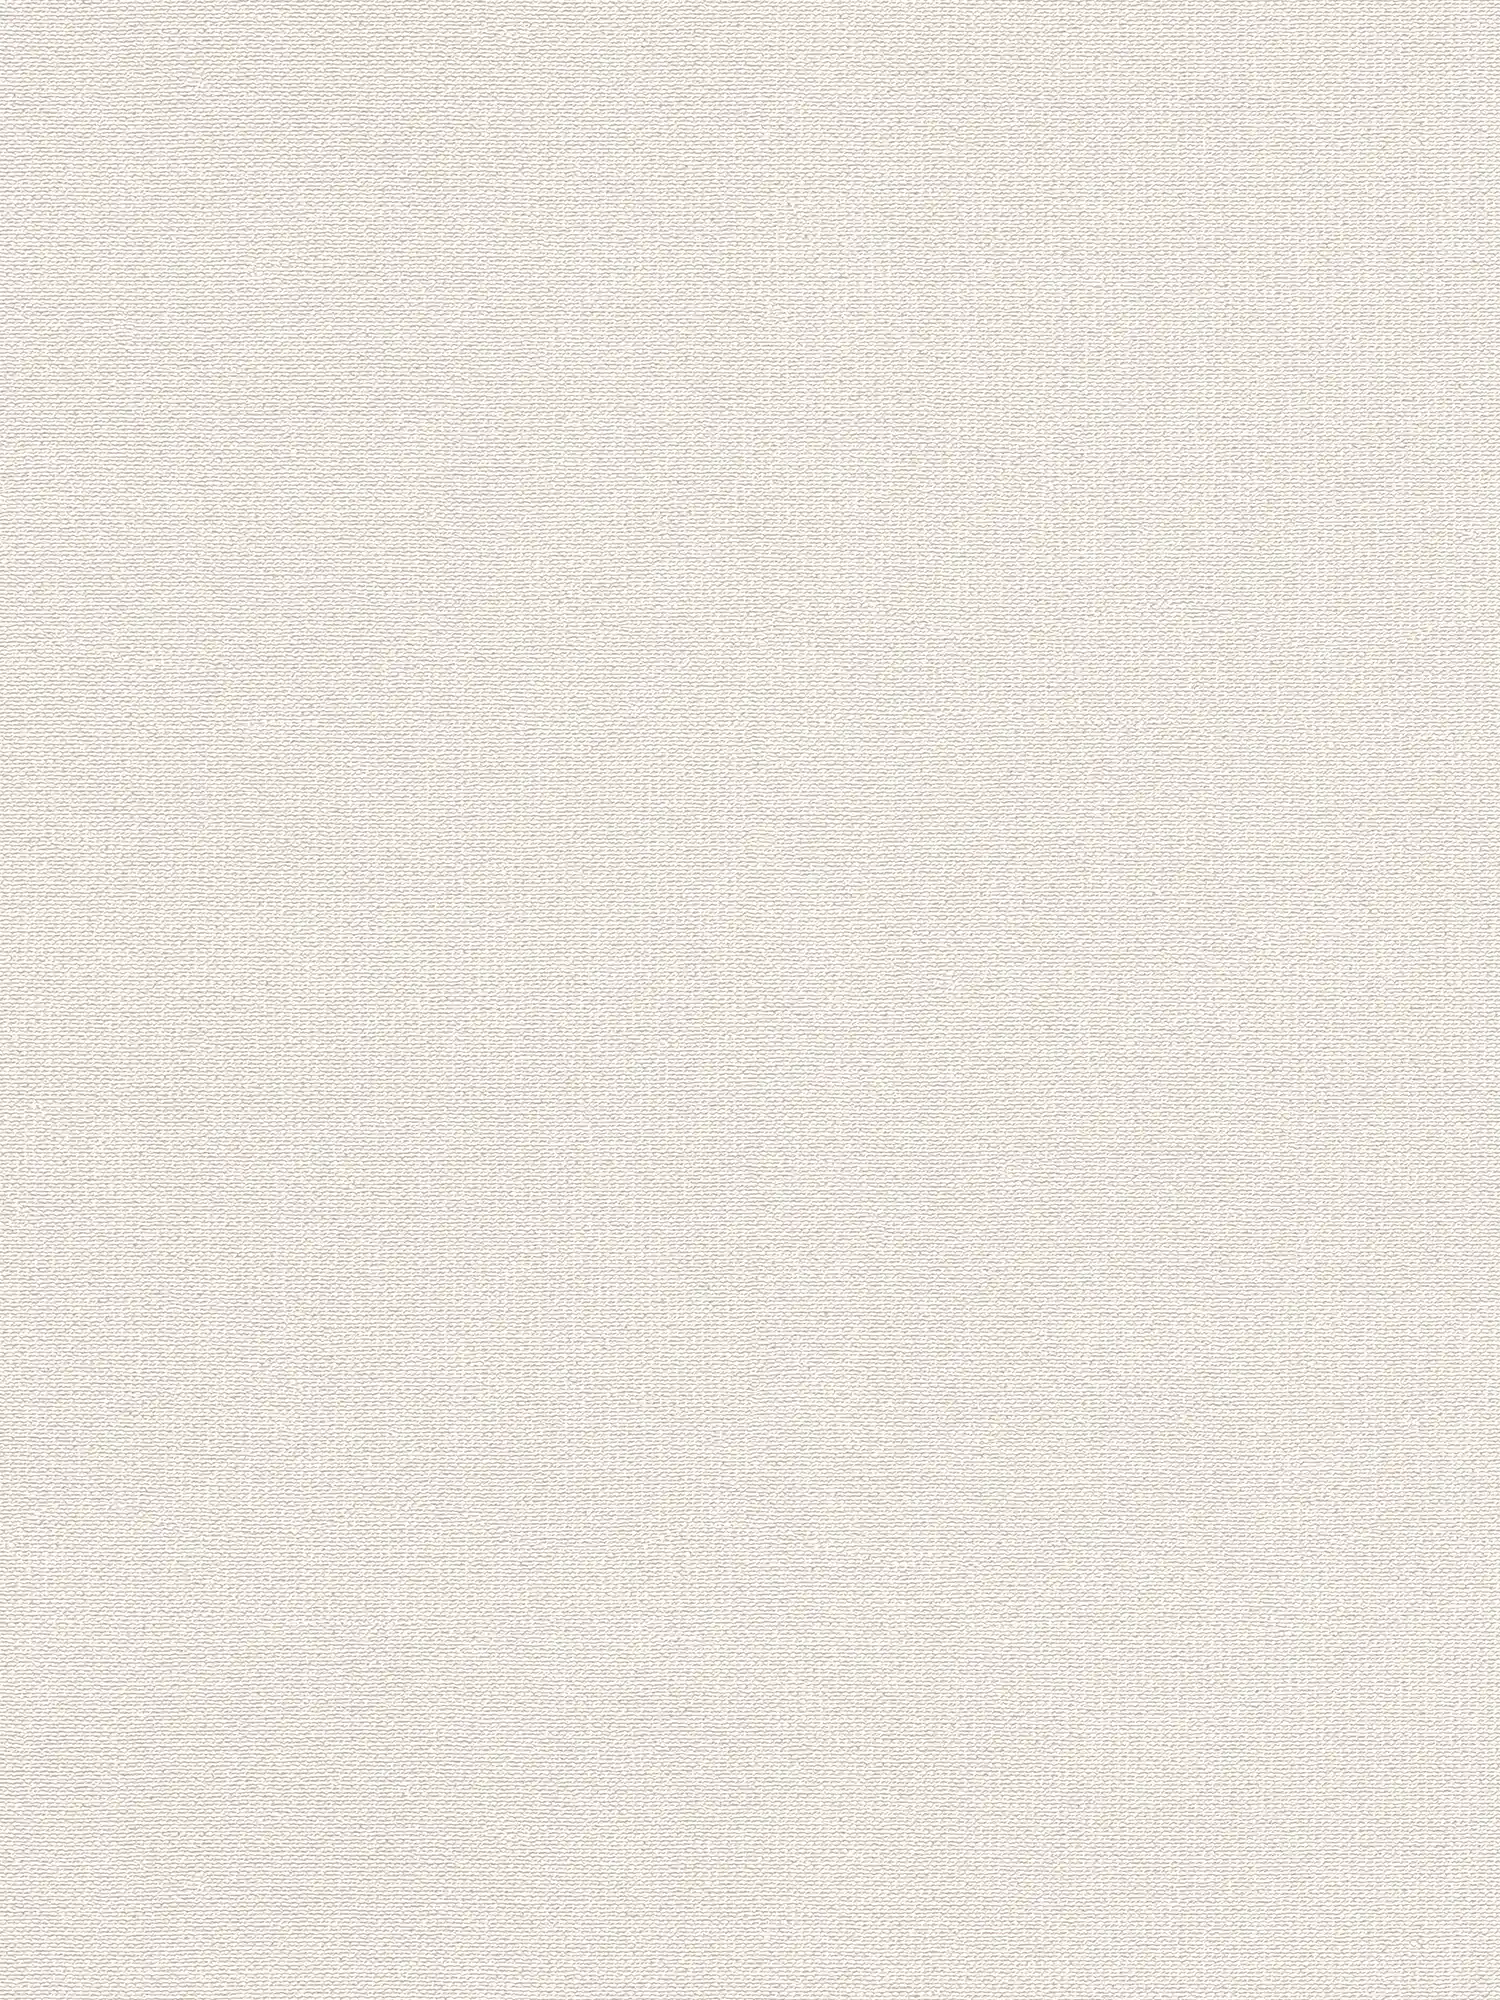 Matt non-woven wallpaper with linen look structure - white, cream
